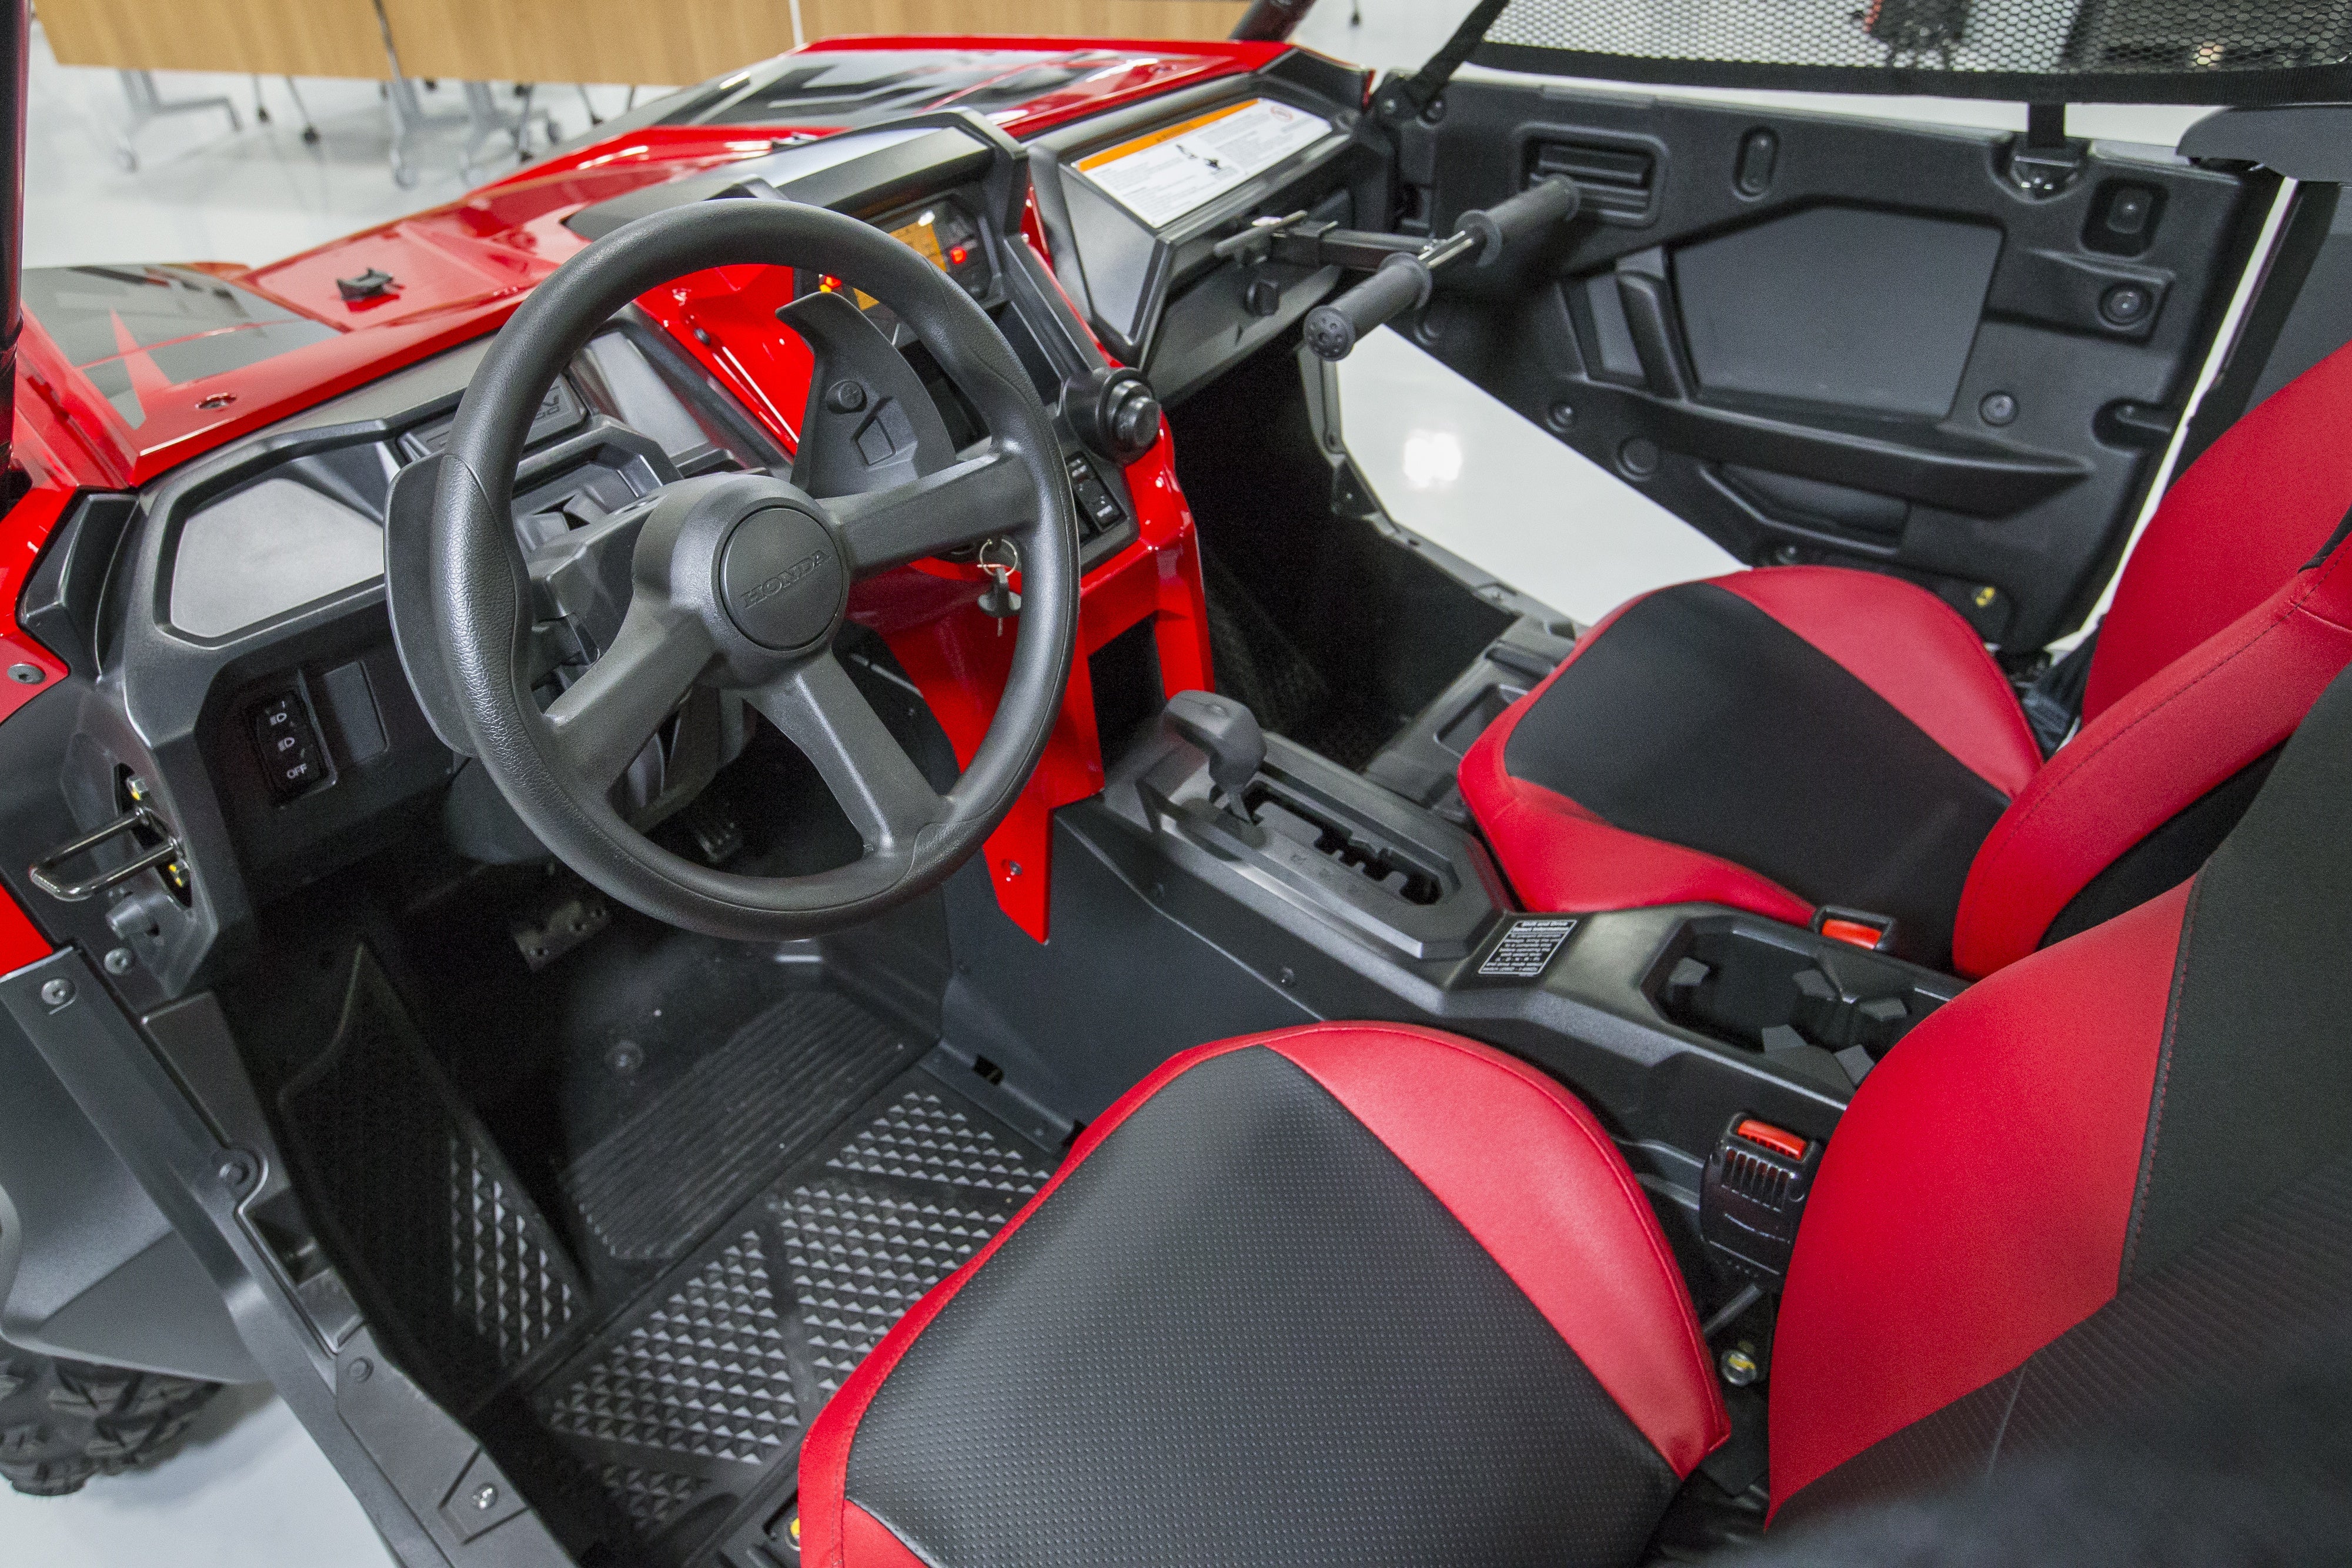 Honda Talon seats